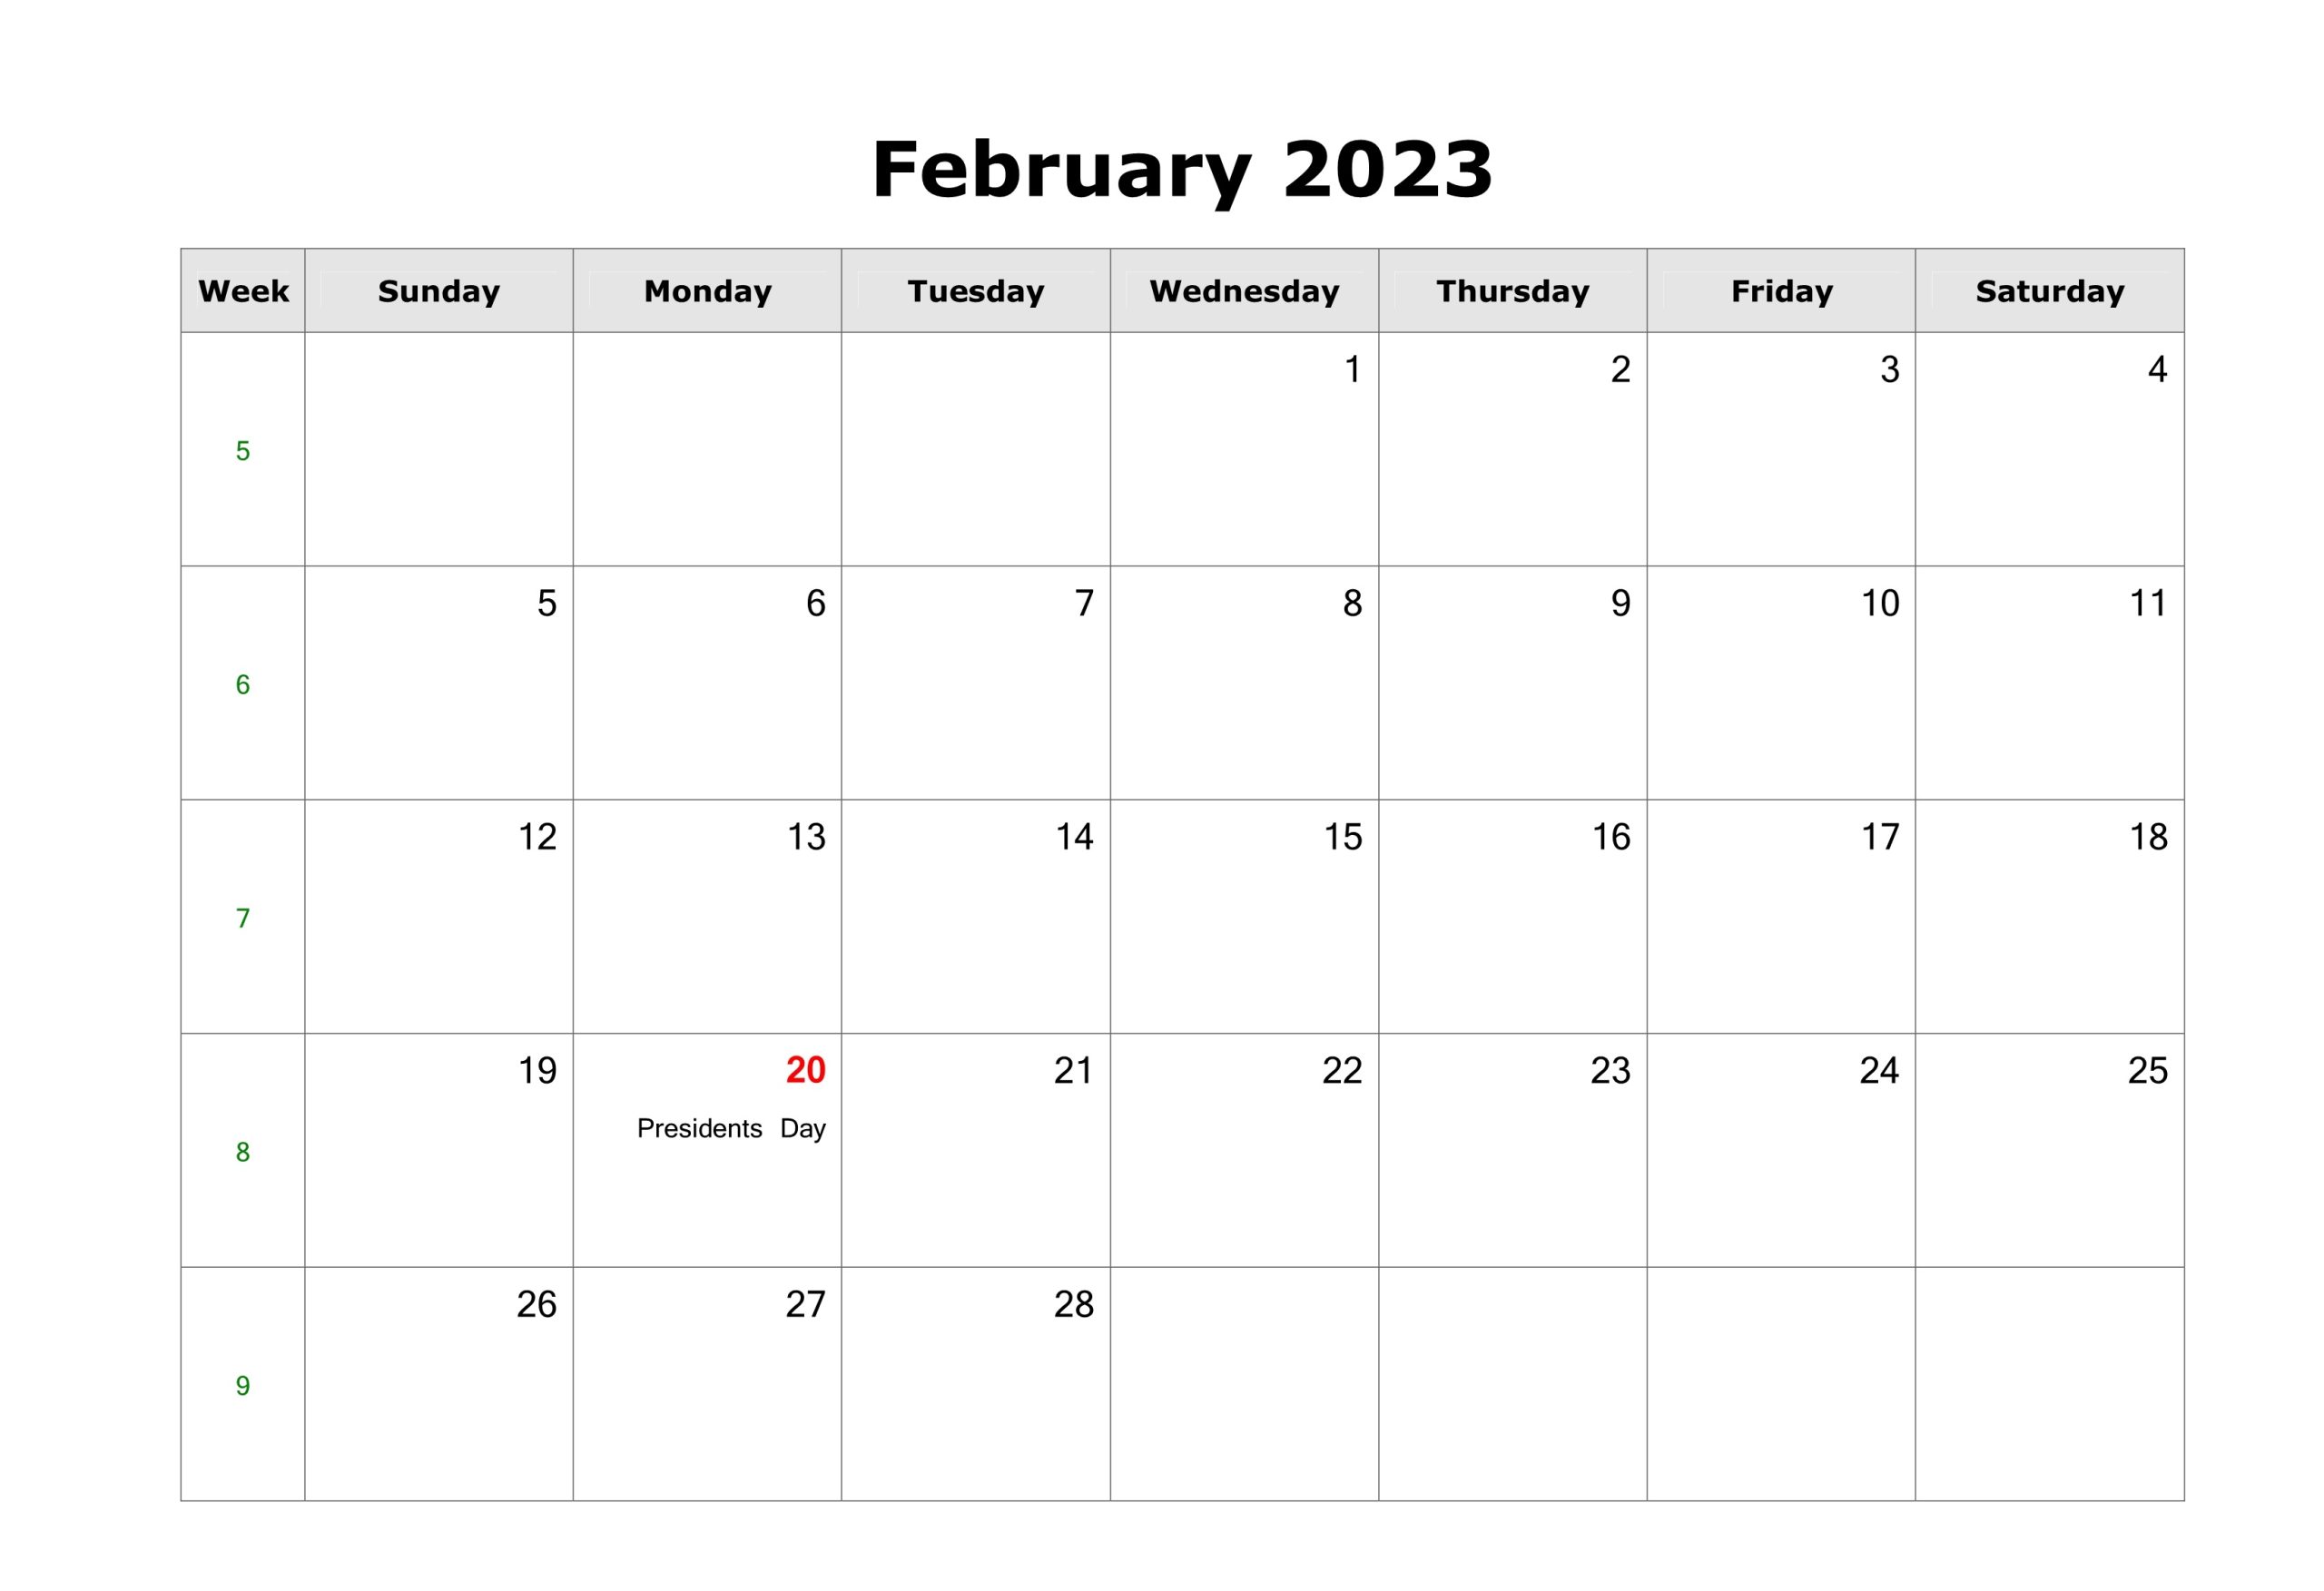 February 2023 Calendar With Holidays Template